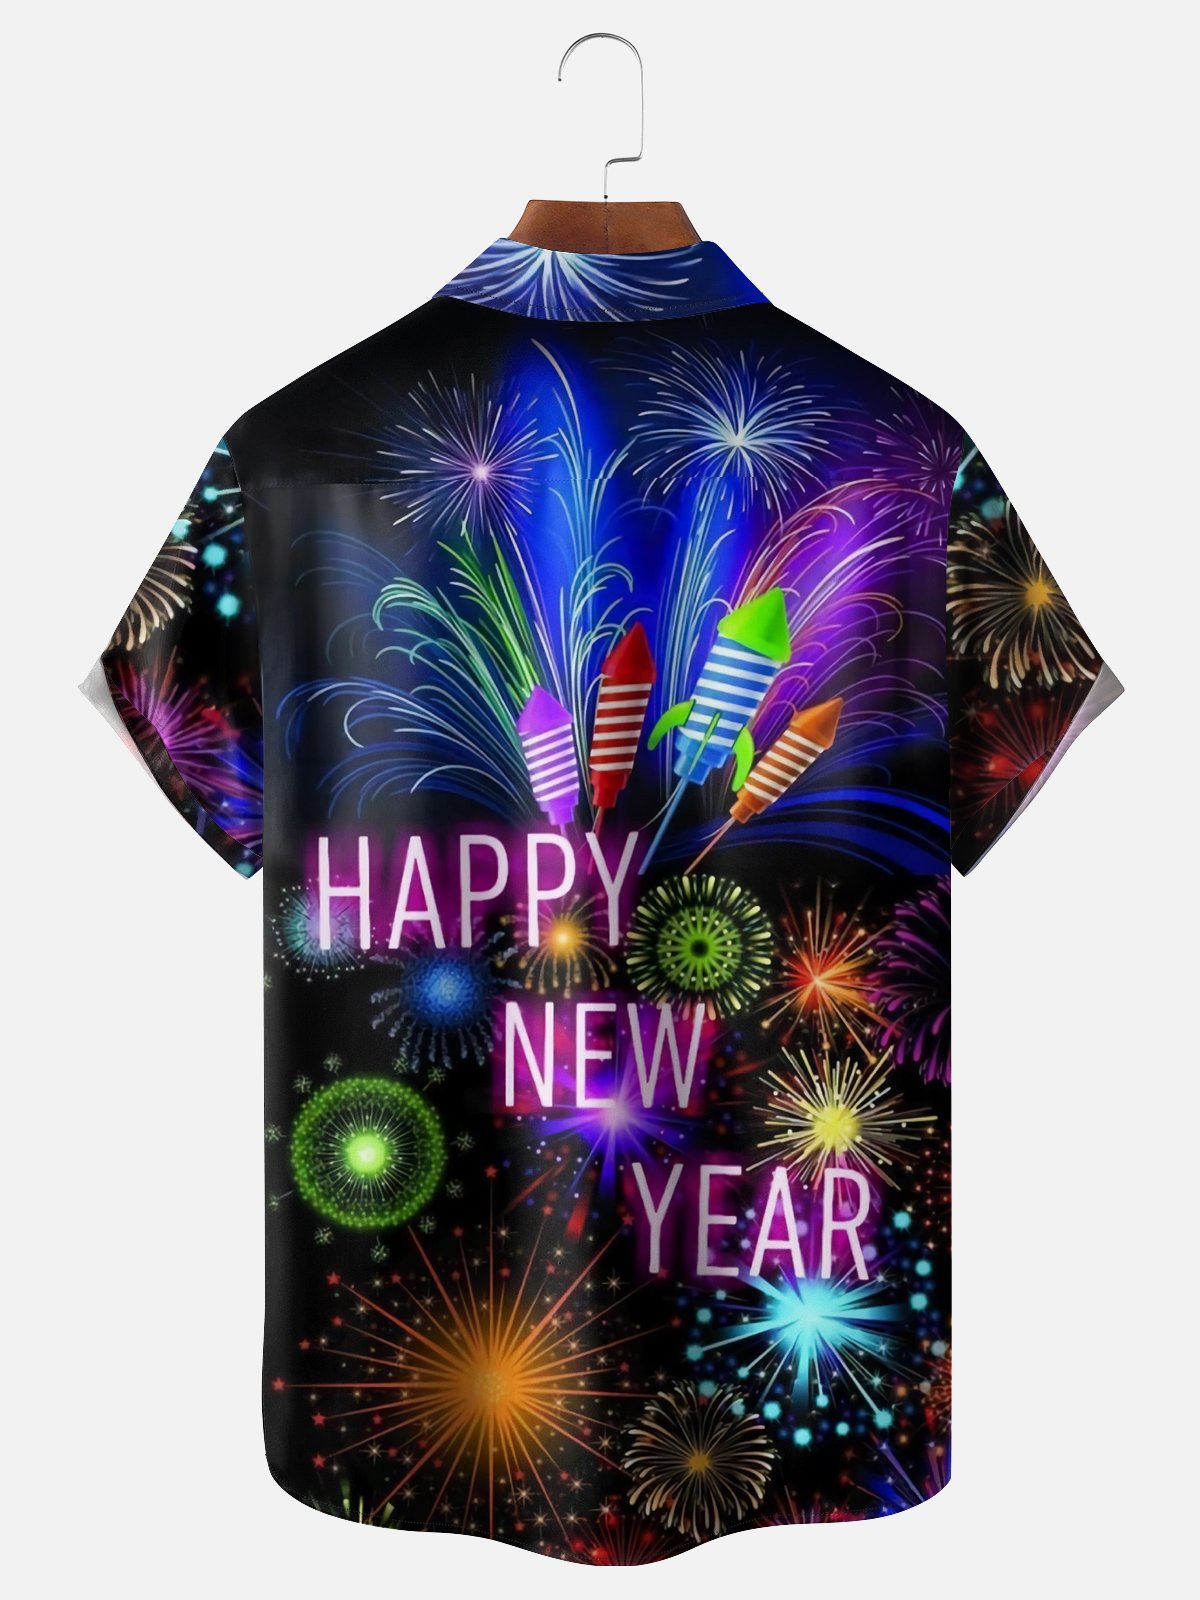 Hardaddy New Year Chest Pocket Short Sleeve Casual Shirt